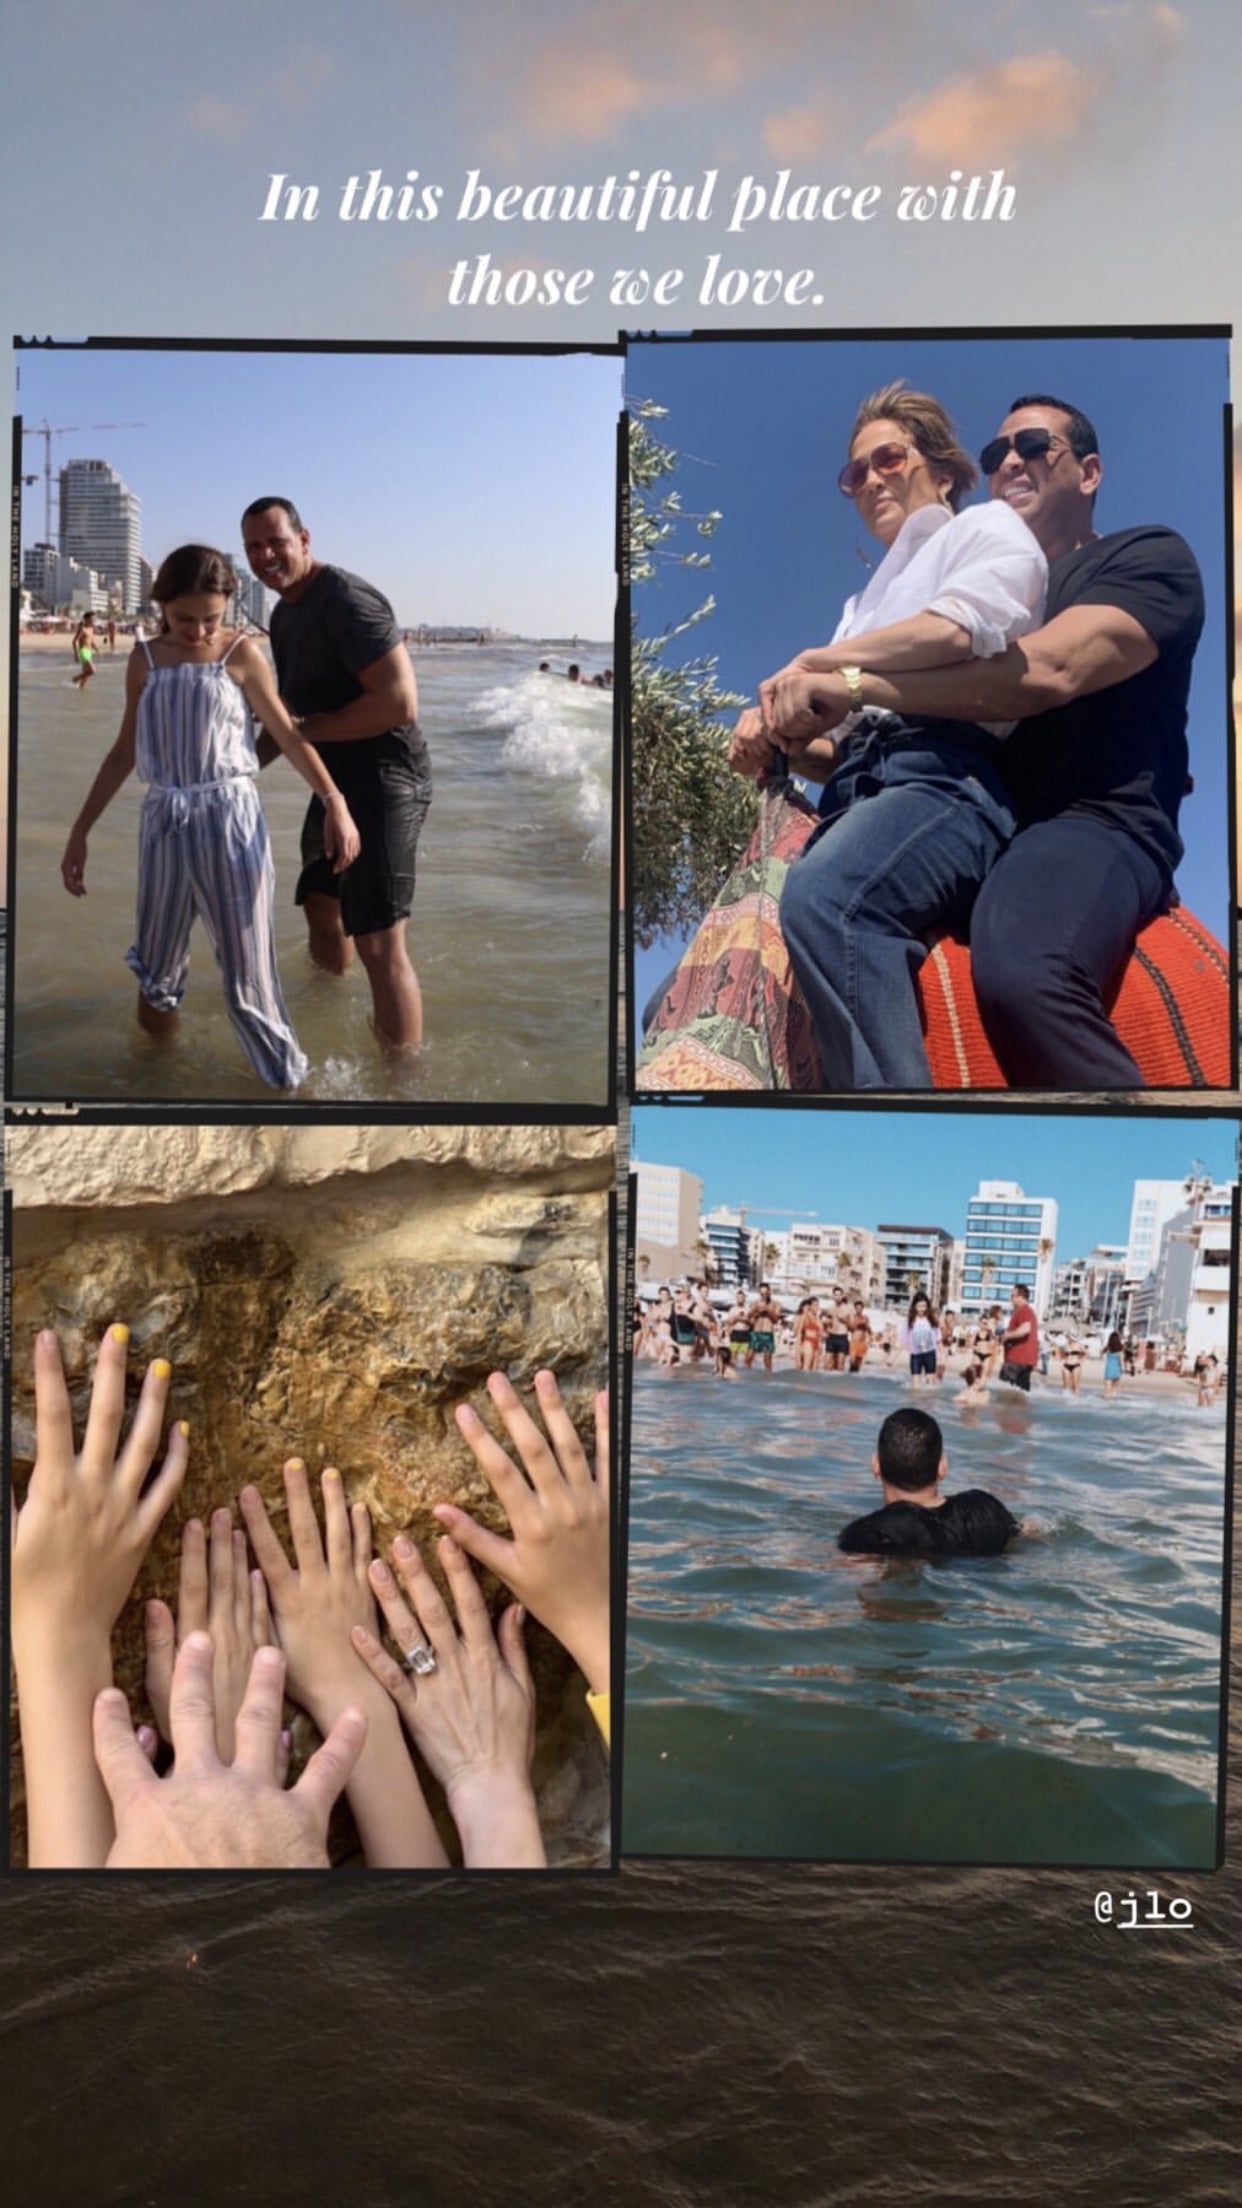 Inside Jennifer Lopez, Alex Rodriguez's Family Trip to Israel: Pics